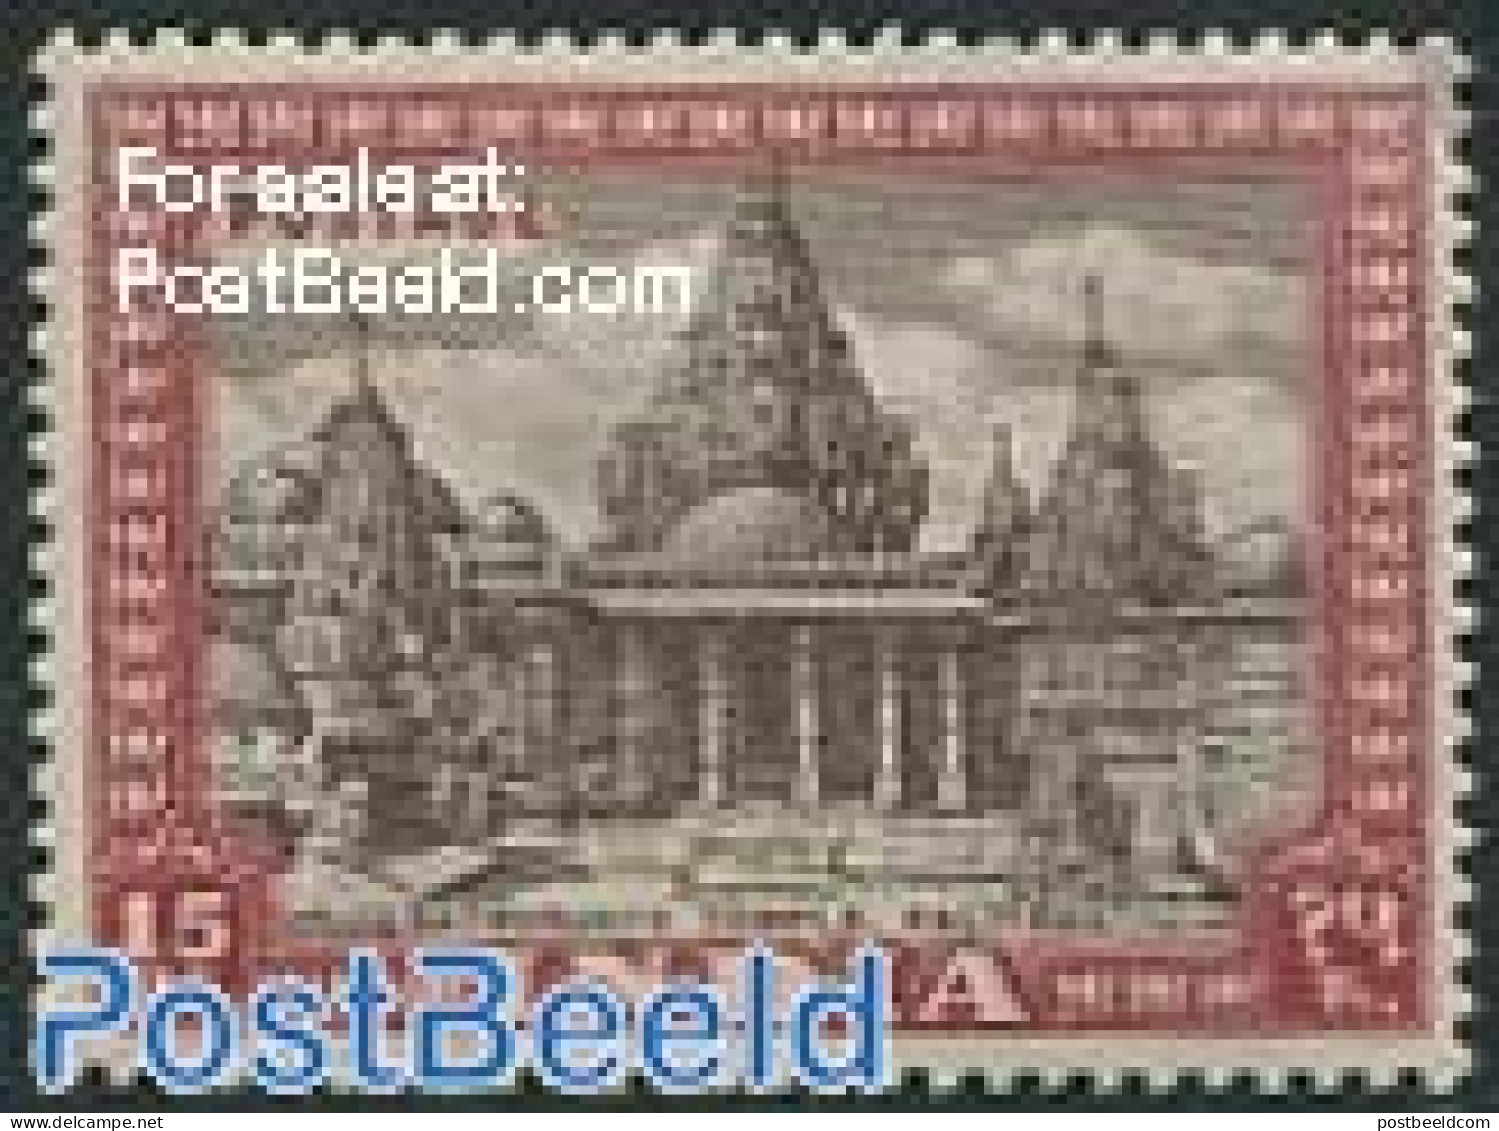 India 1949 15R, Stamp Out Of Set, Unused (hinged) - Unused Stamps